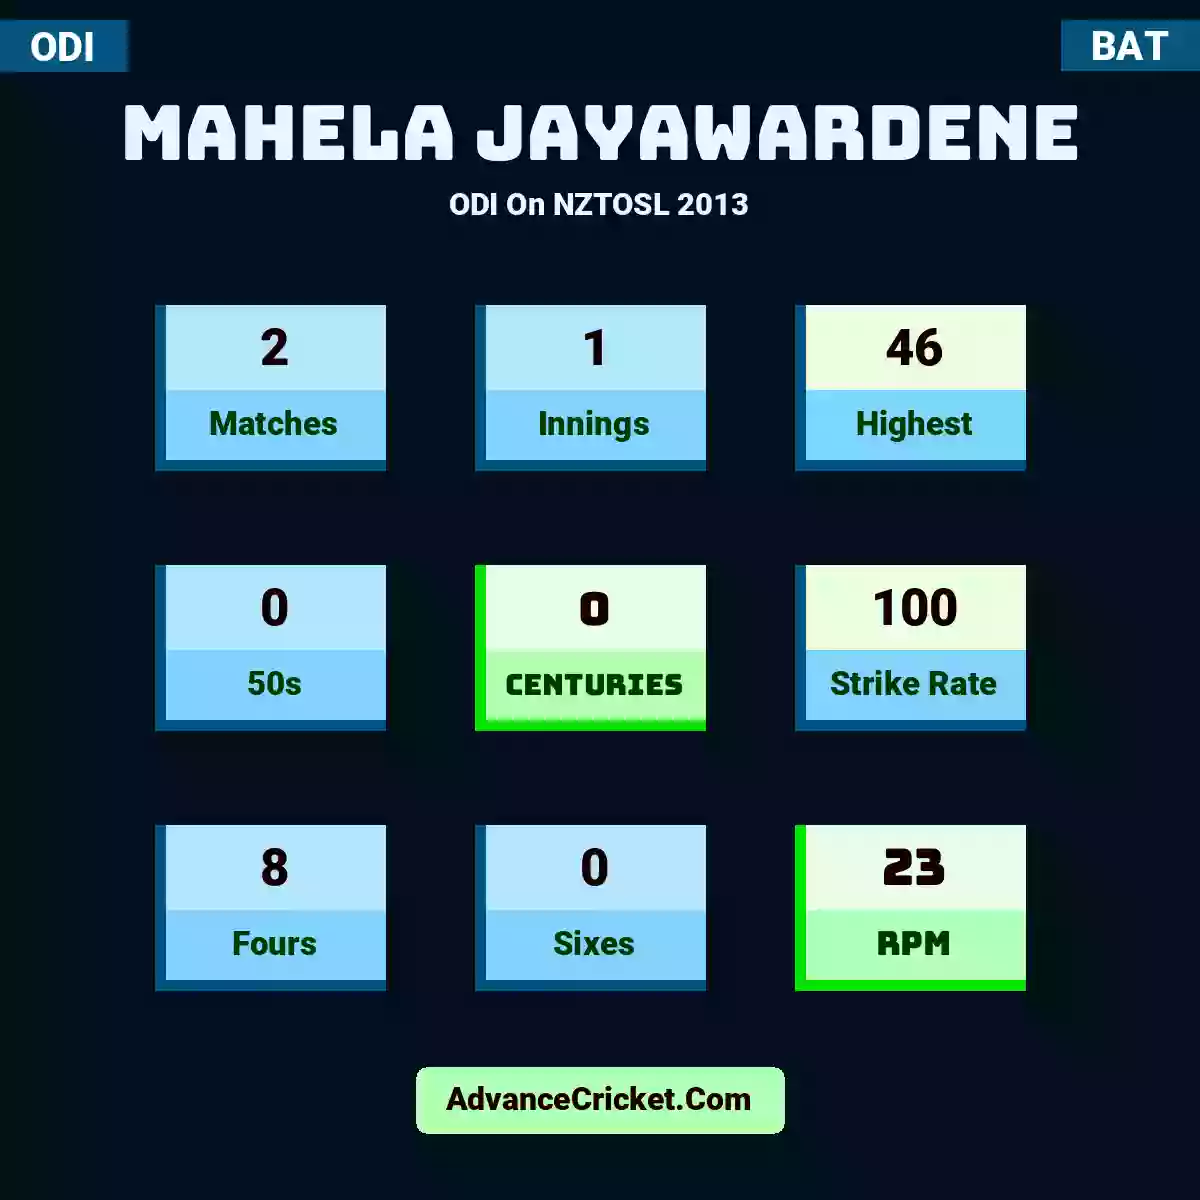 Mahela Jayawardene ODI  On NZTOSL 2013, Mahela Jayawardene played 2 matches, scored 46 runs as highest, 0 half-centuries, and 0 centuries, with a strike rate of 100. M.Jayawardene hit 8 fours and 0 sixes, with an RPM of 23.